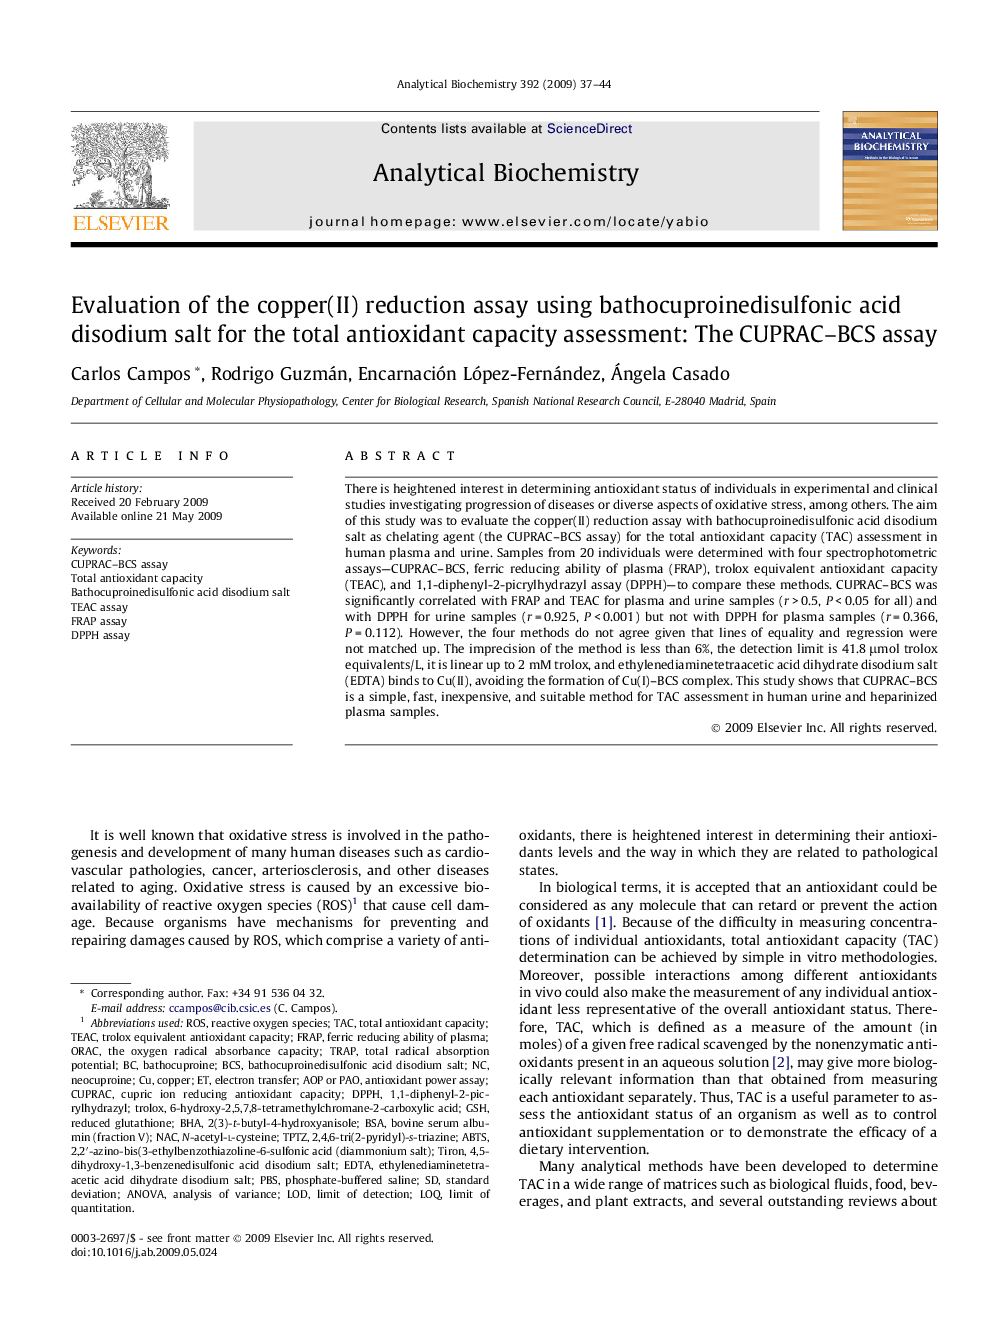 Evaluation of the copper(II) reduction assay using bathocuproinedisulfonic acid disodium salt for the total antioxidant capacity assessment: The CUPRAC–BCS assay